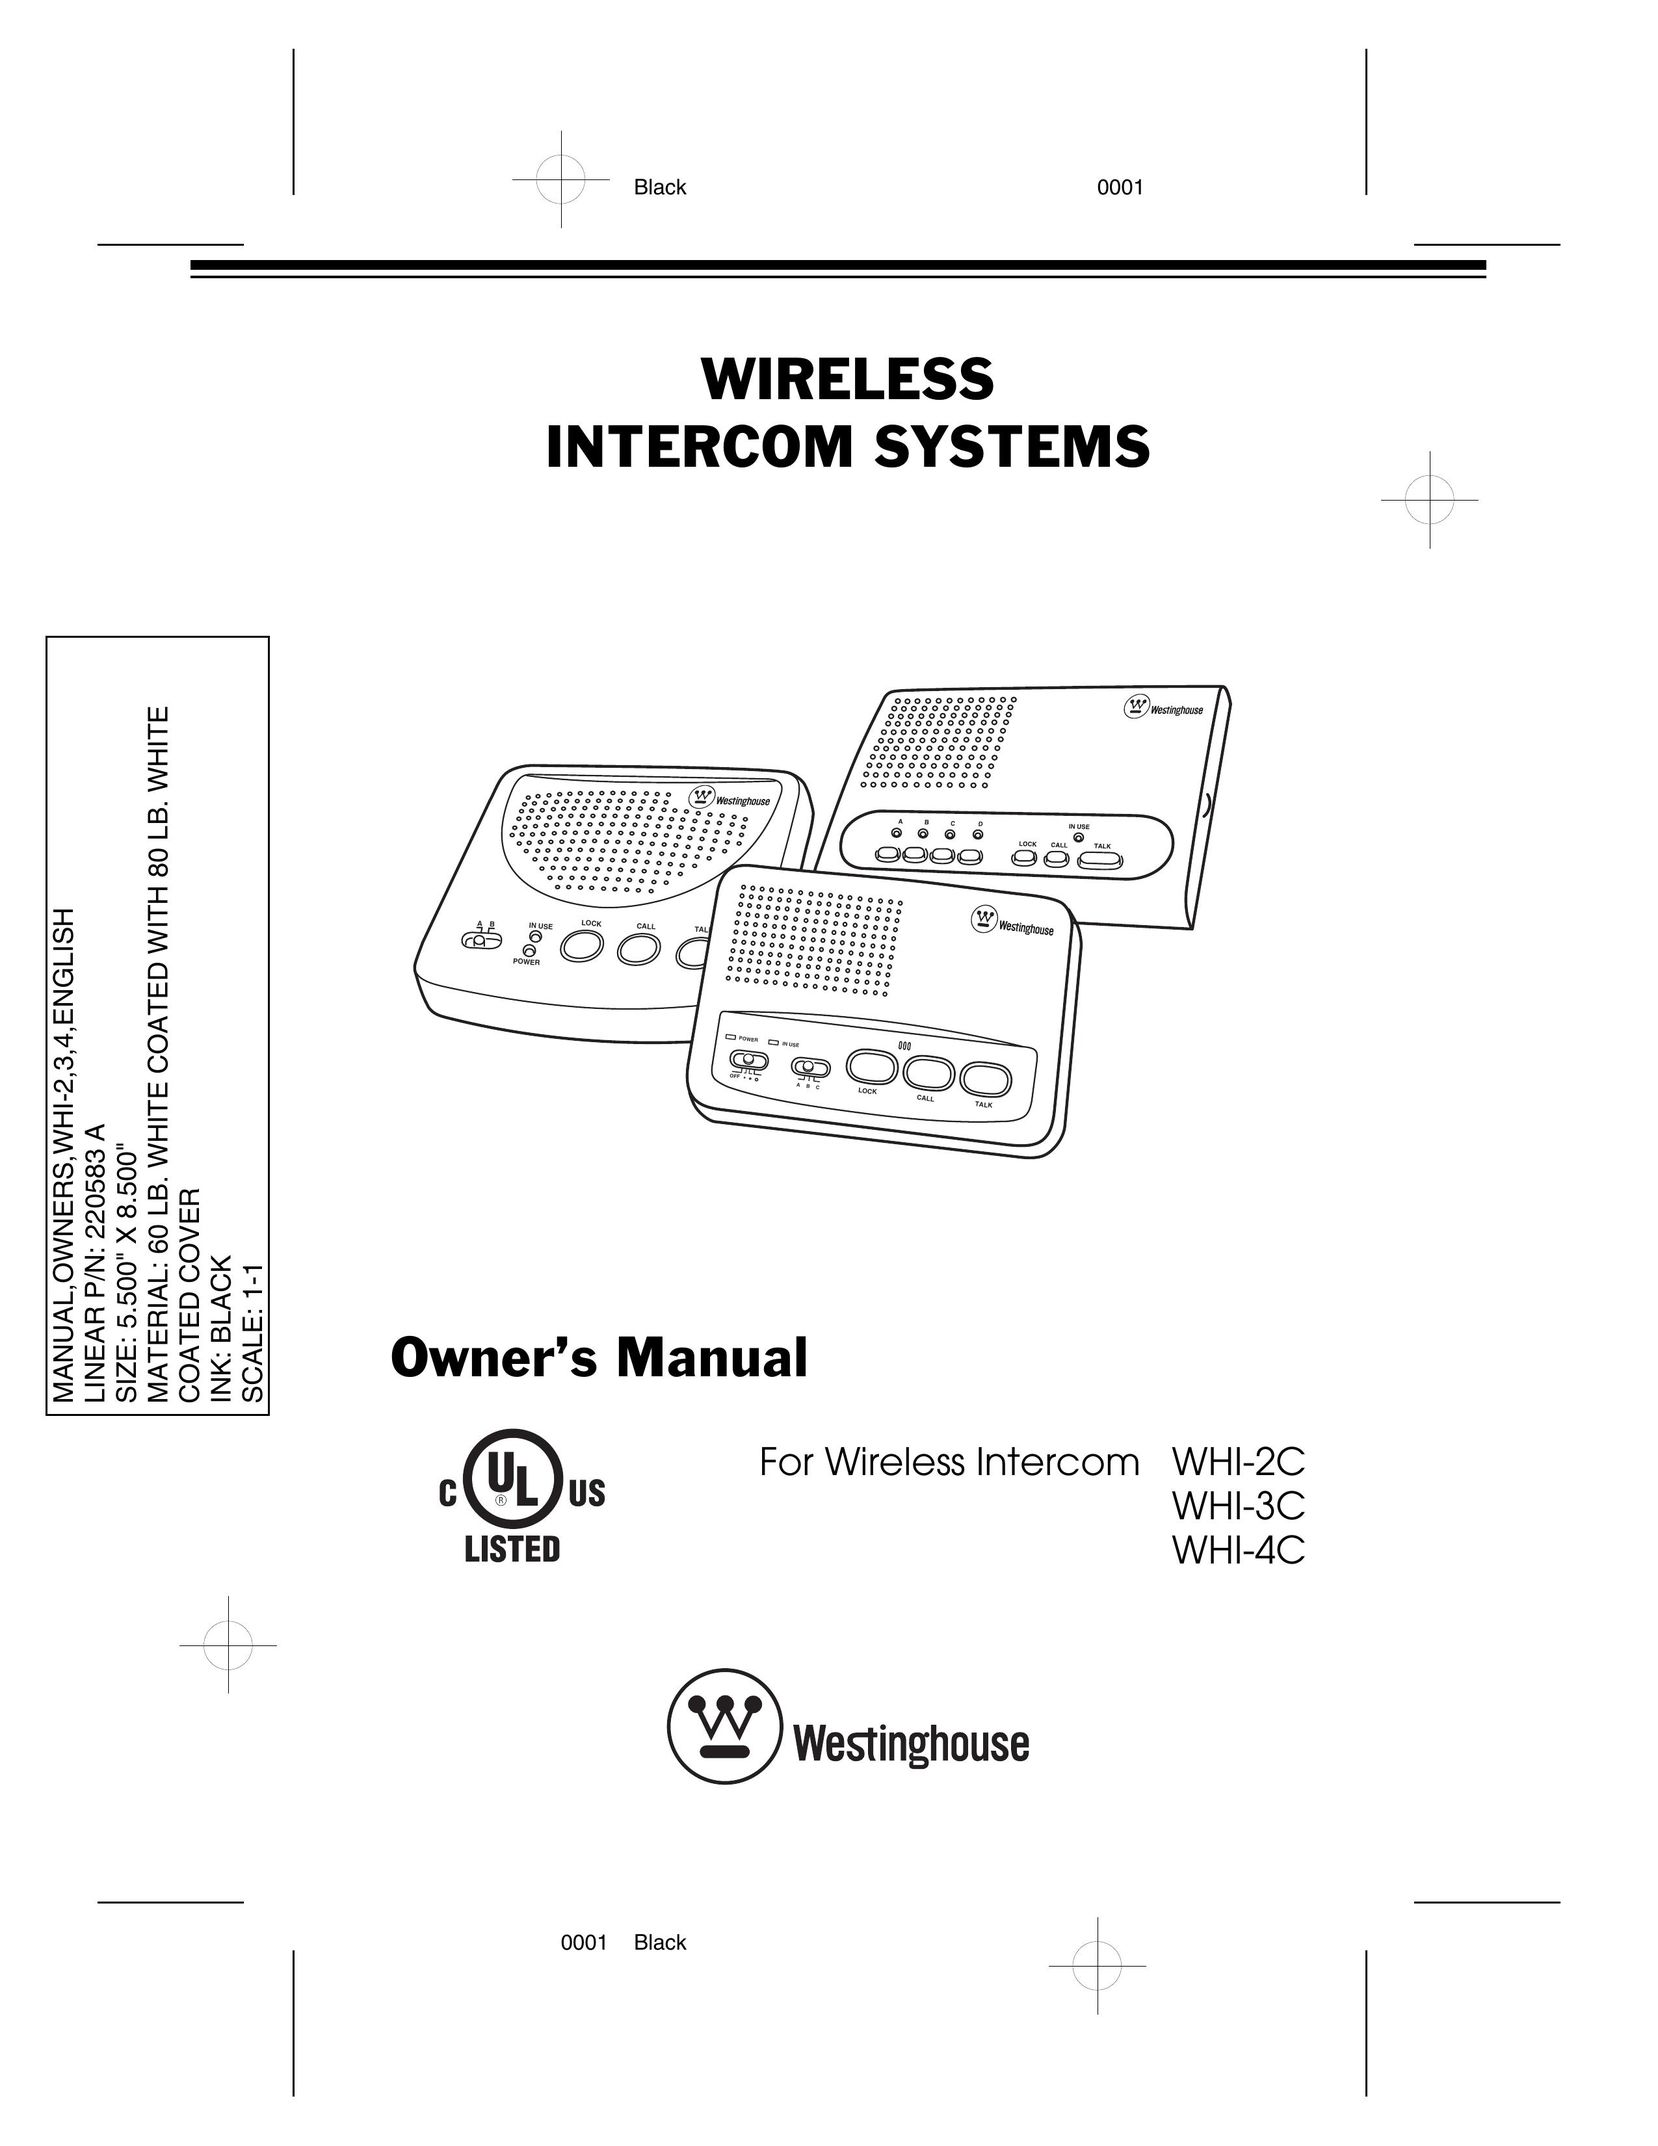 Westinghouse WHI-2C Intercom System User Manual